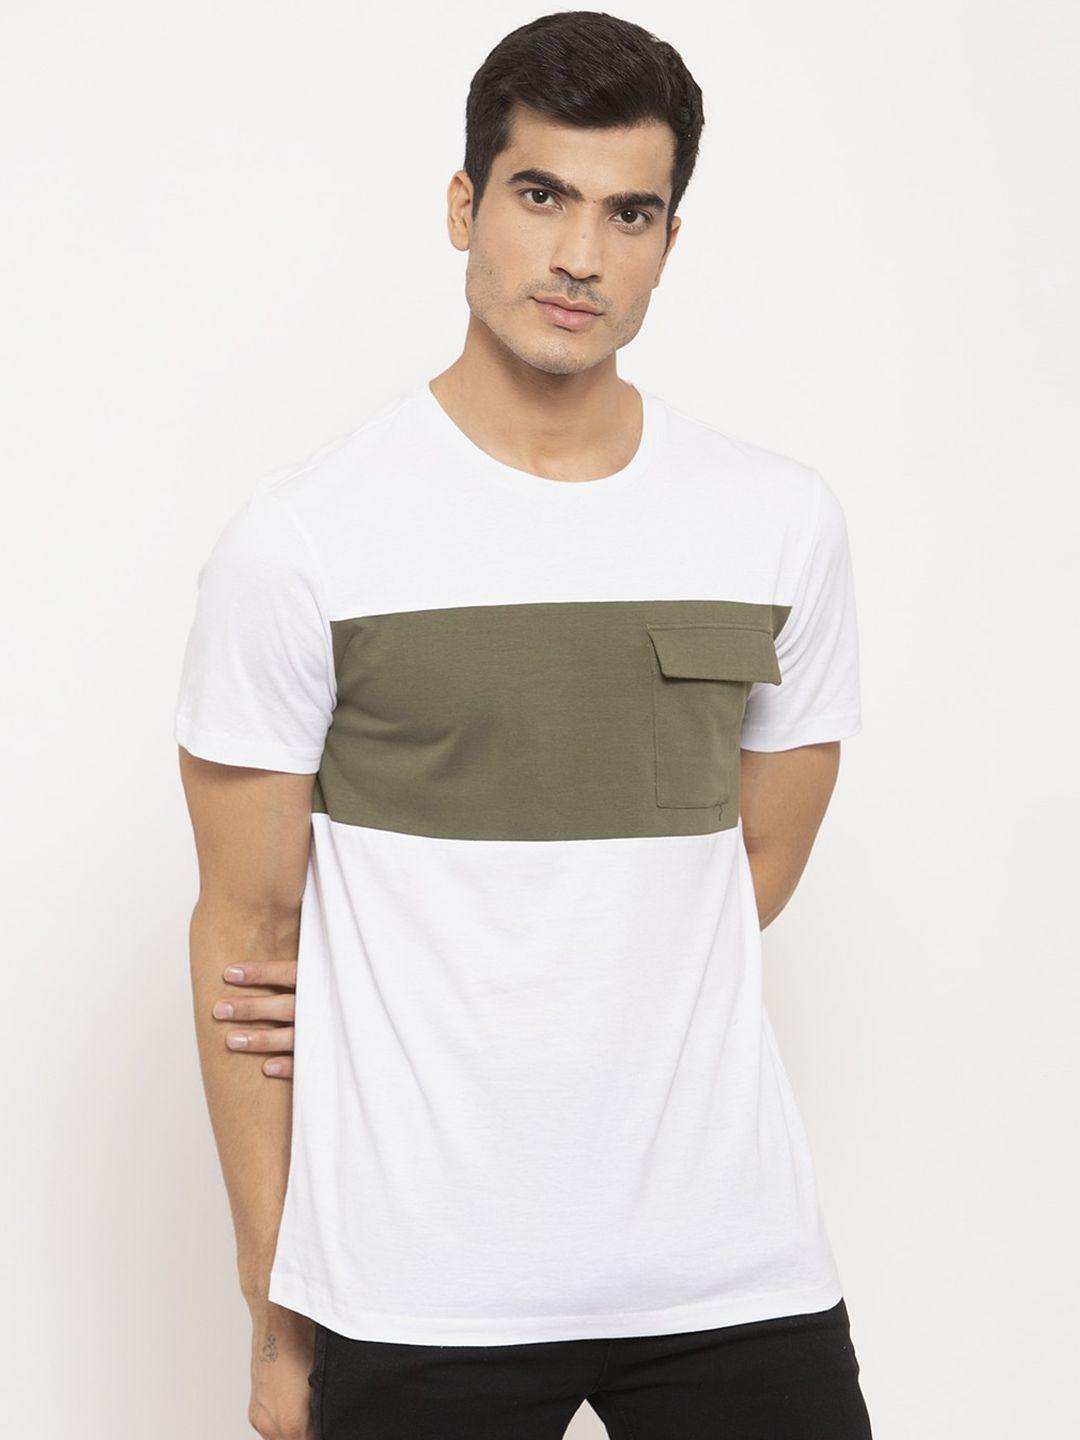 door74-men-white-&-olive-green-colourblocked-pocket-detailing-cotton-t-shirt